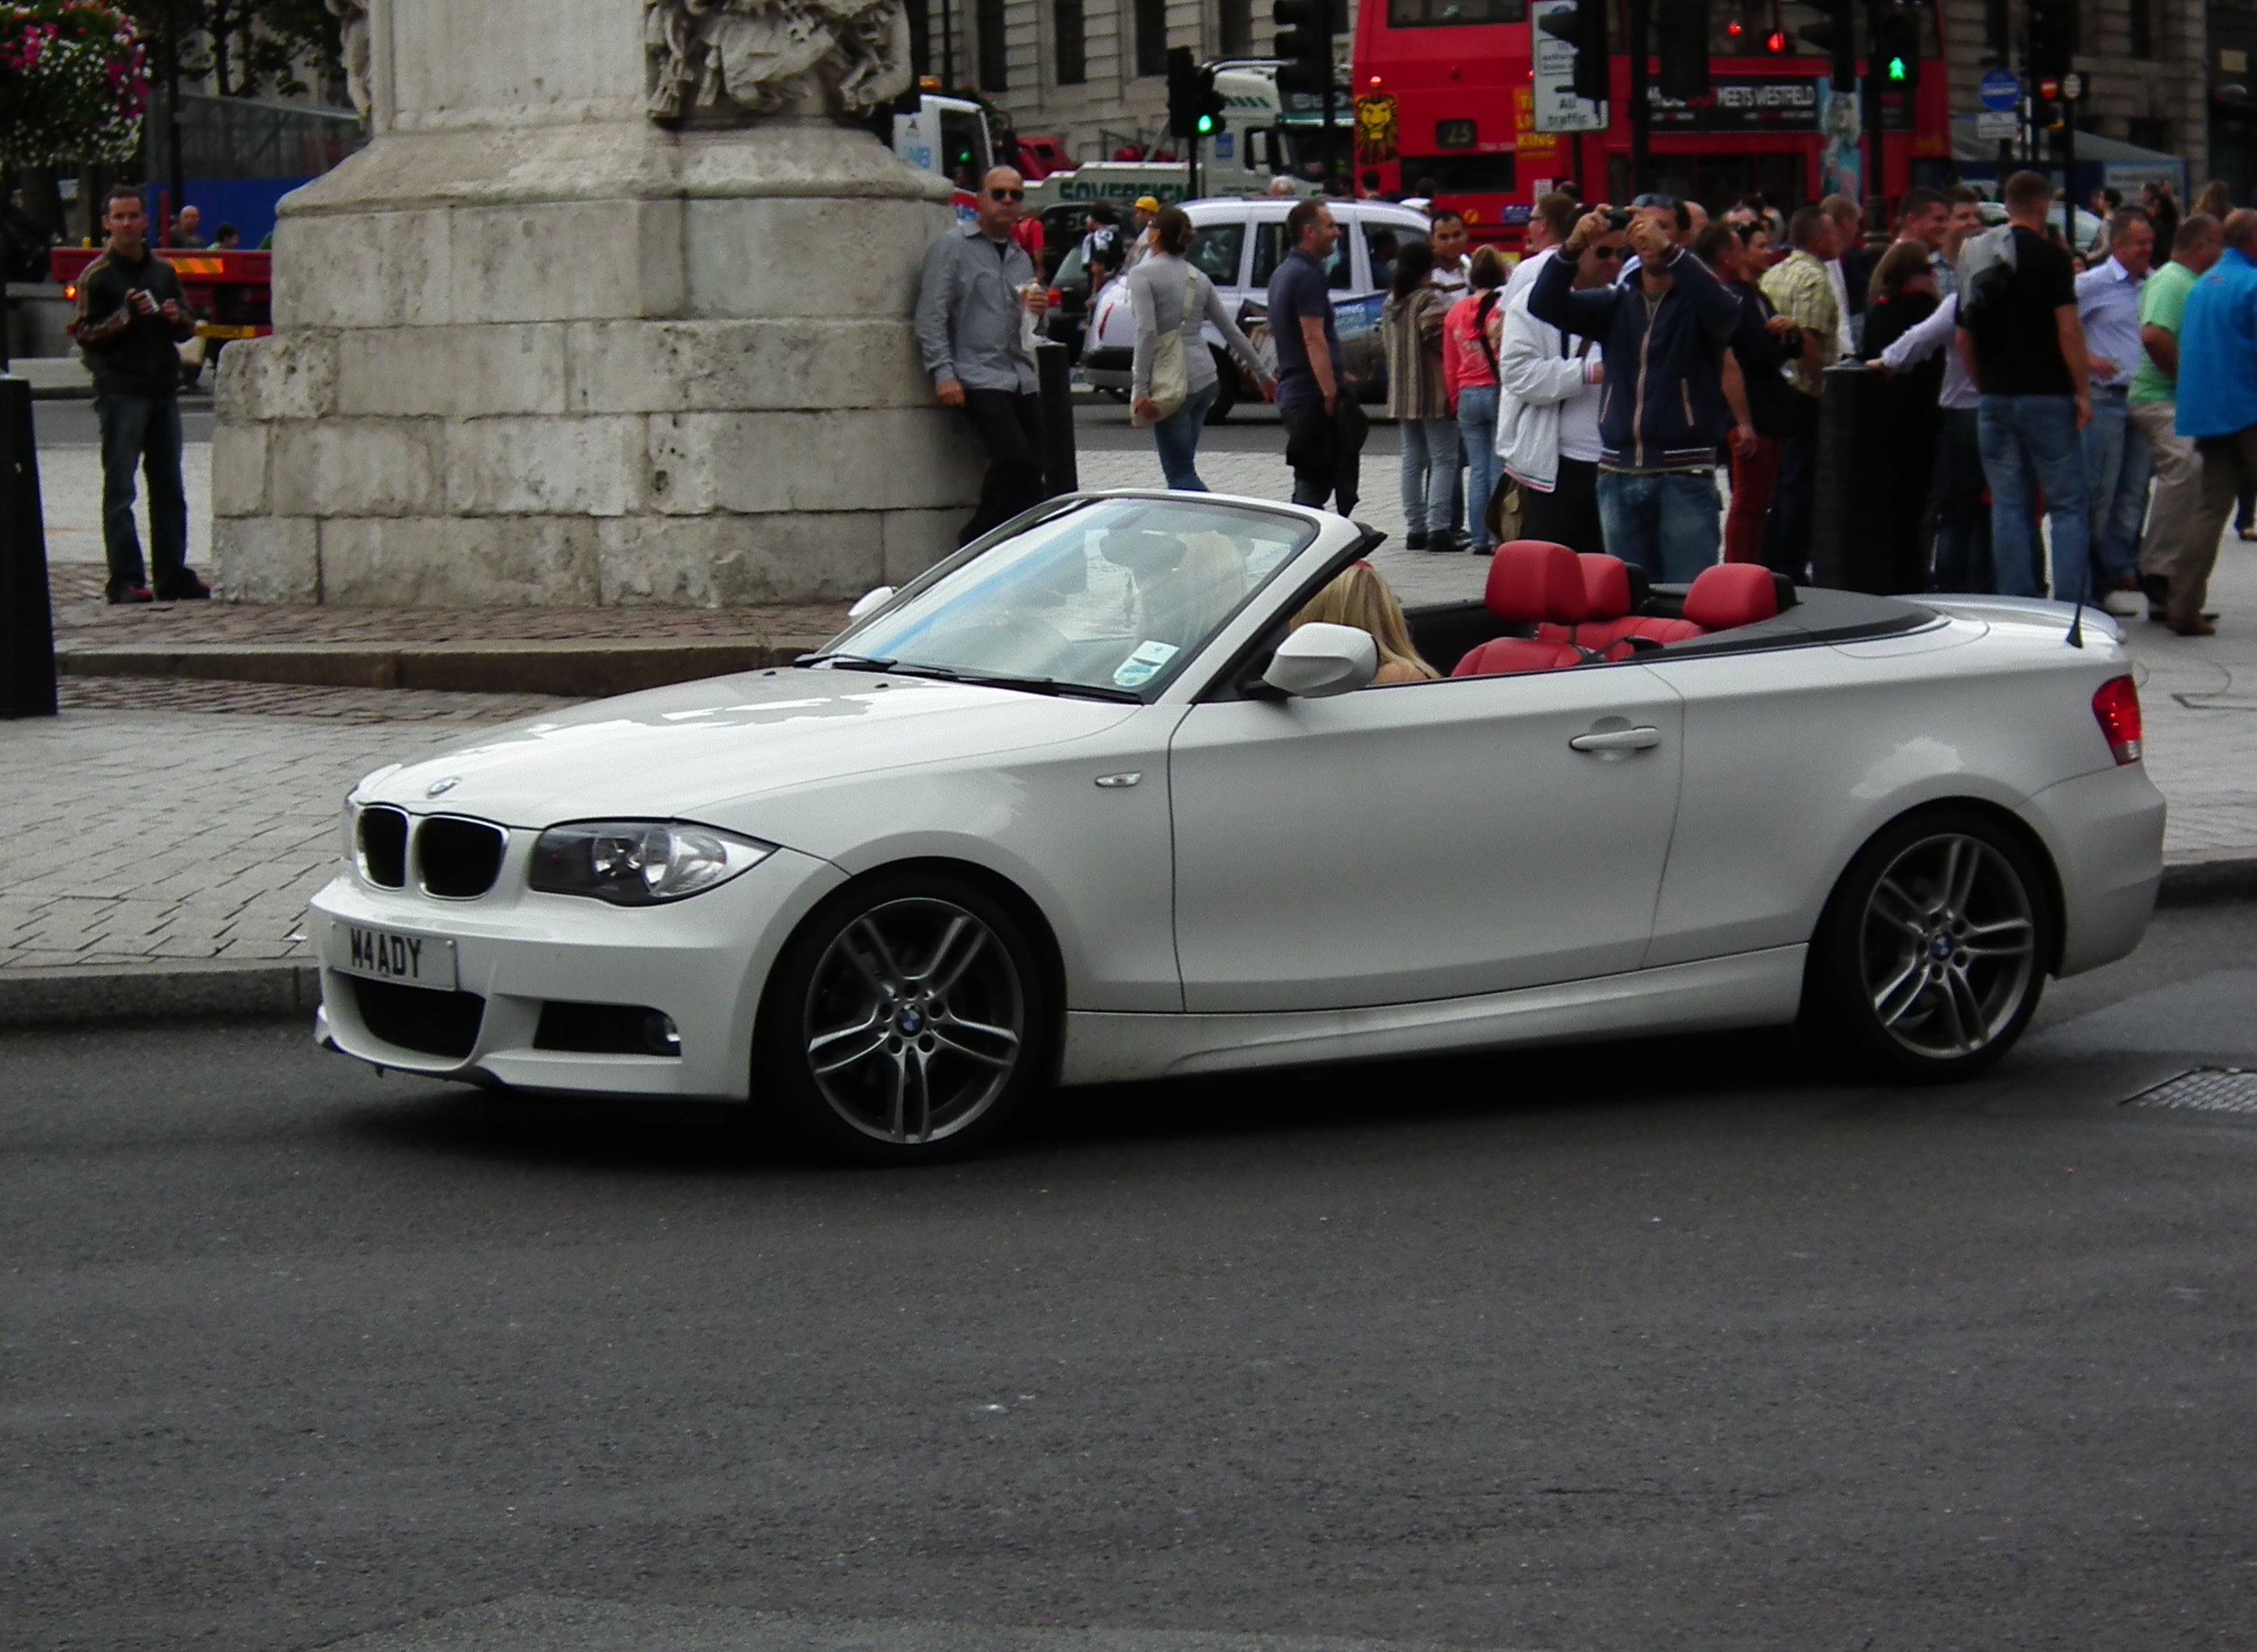 BMW 118D Cabrio | Flickr - Photo Sharing!